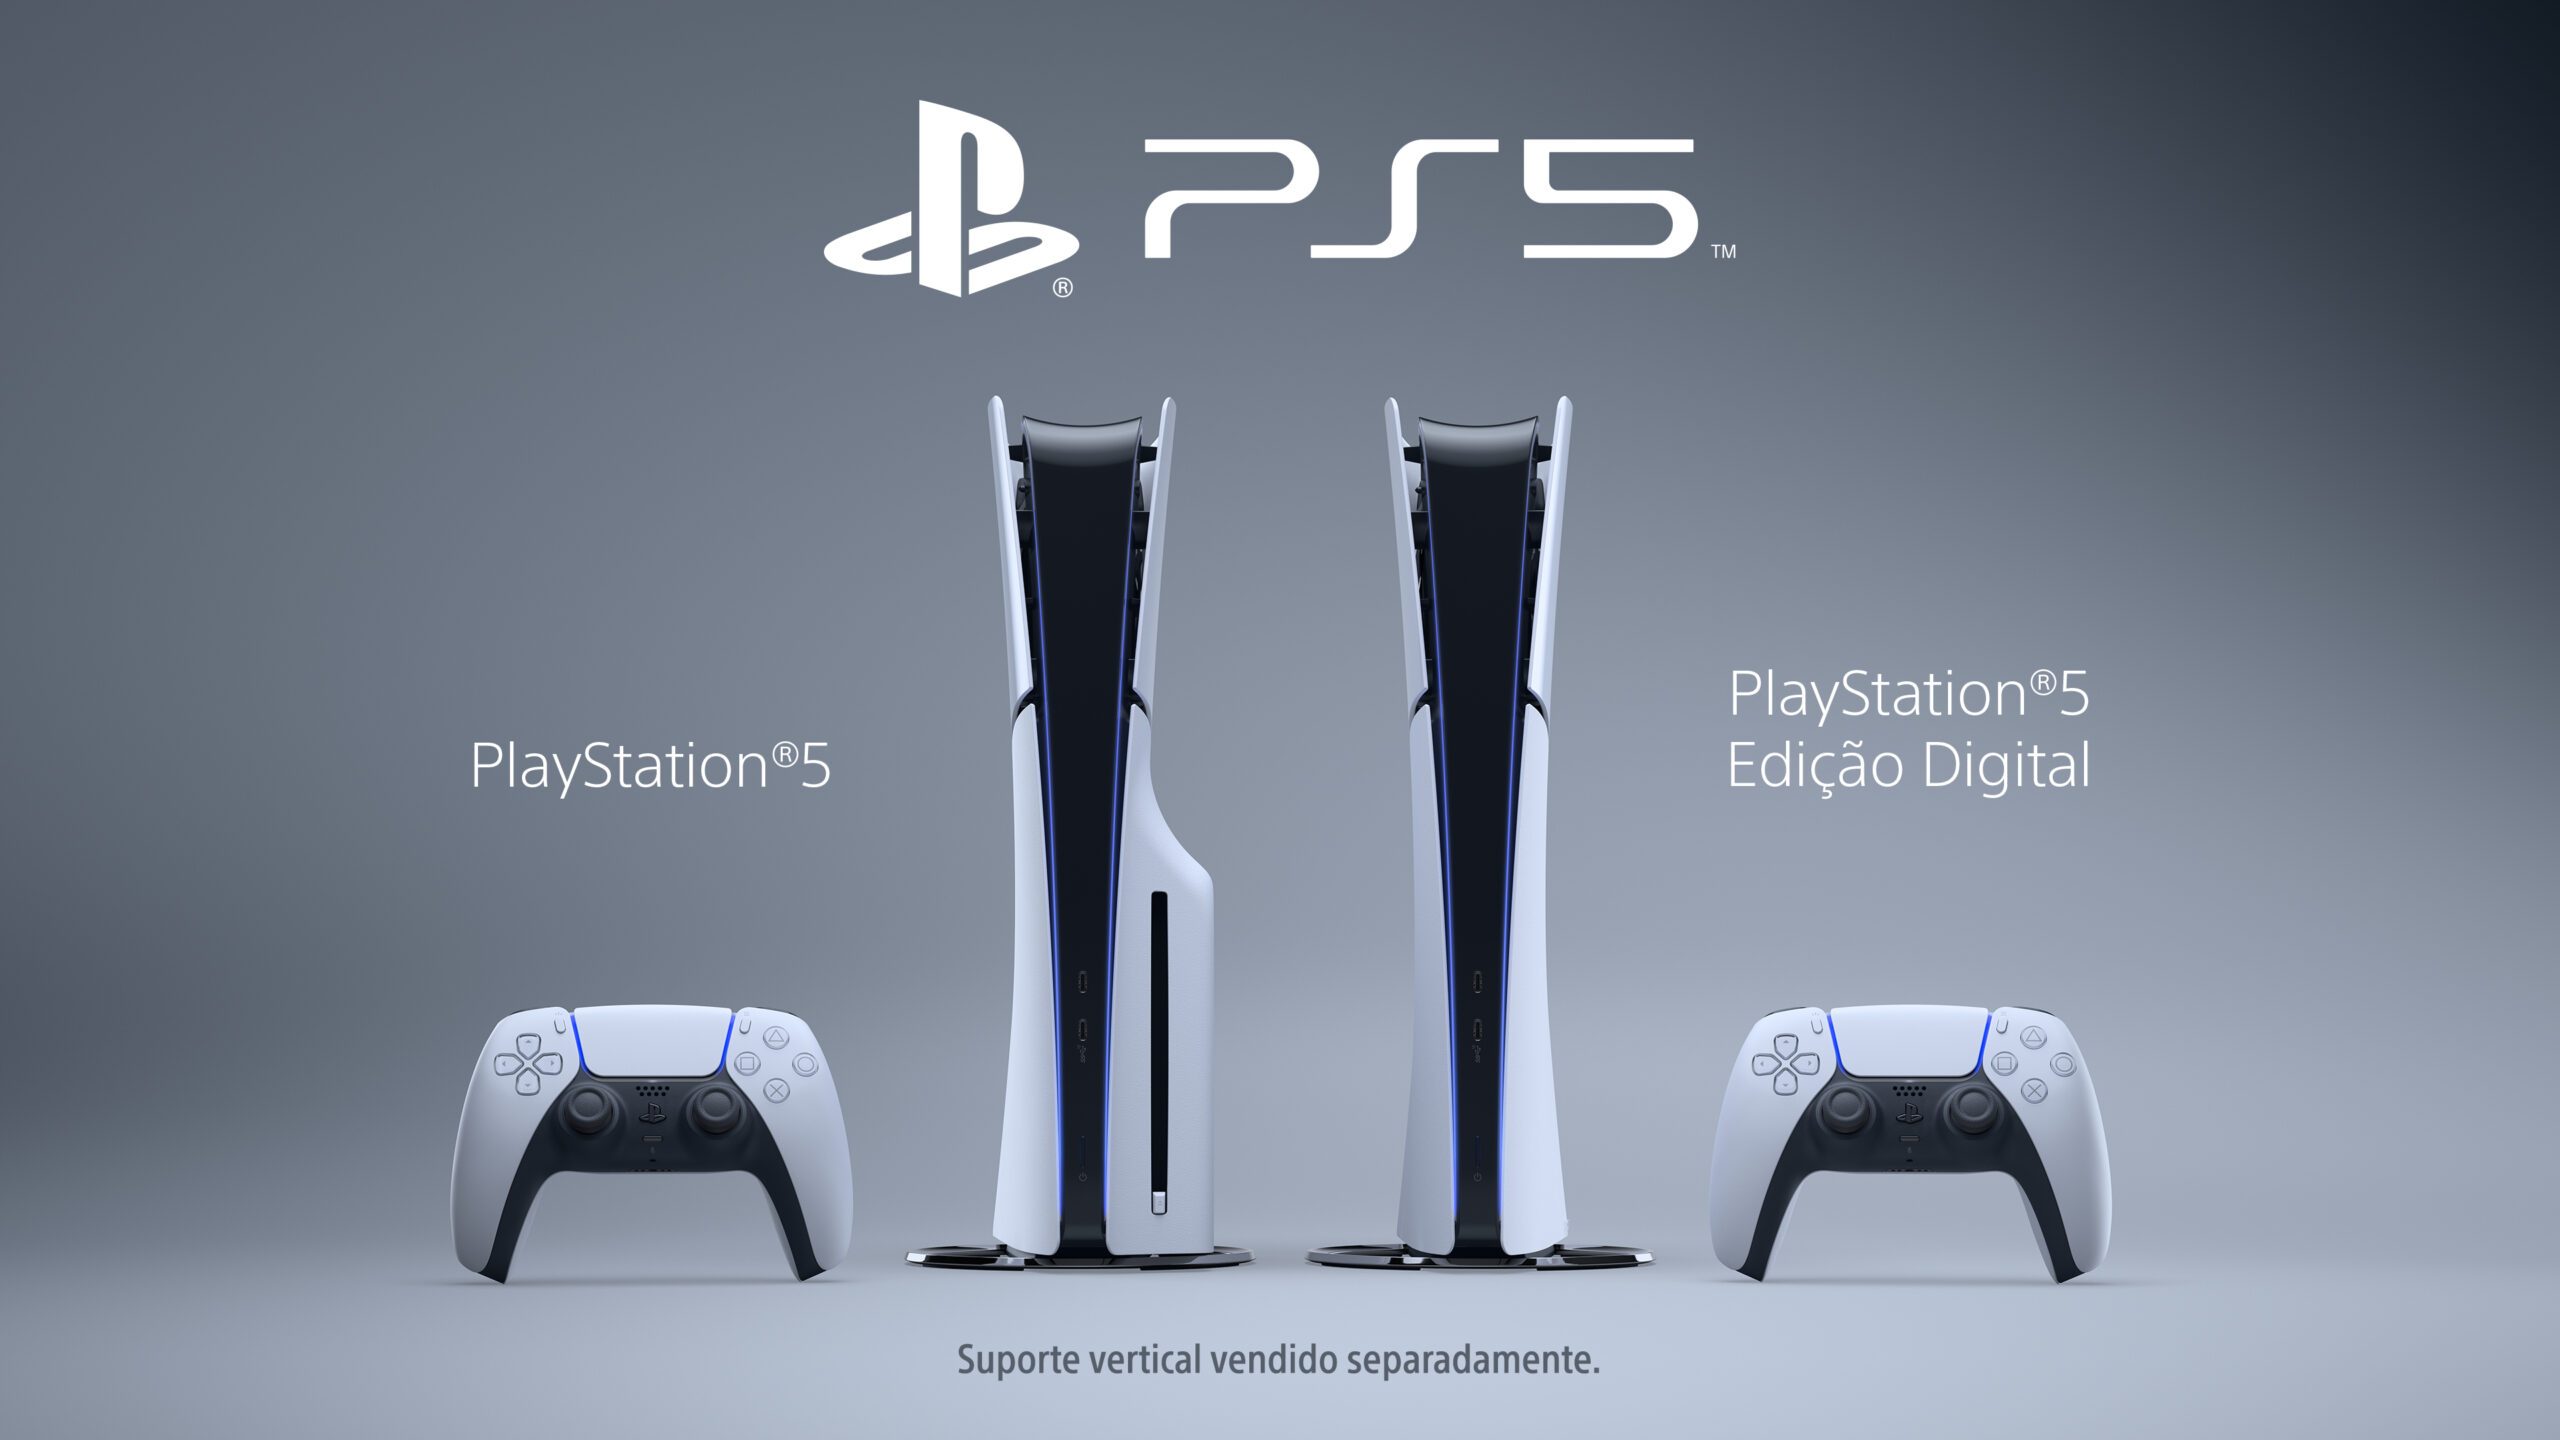 Sony pretende lançar ao menos 2 grandes exclusivos de PS5 por ano 